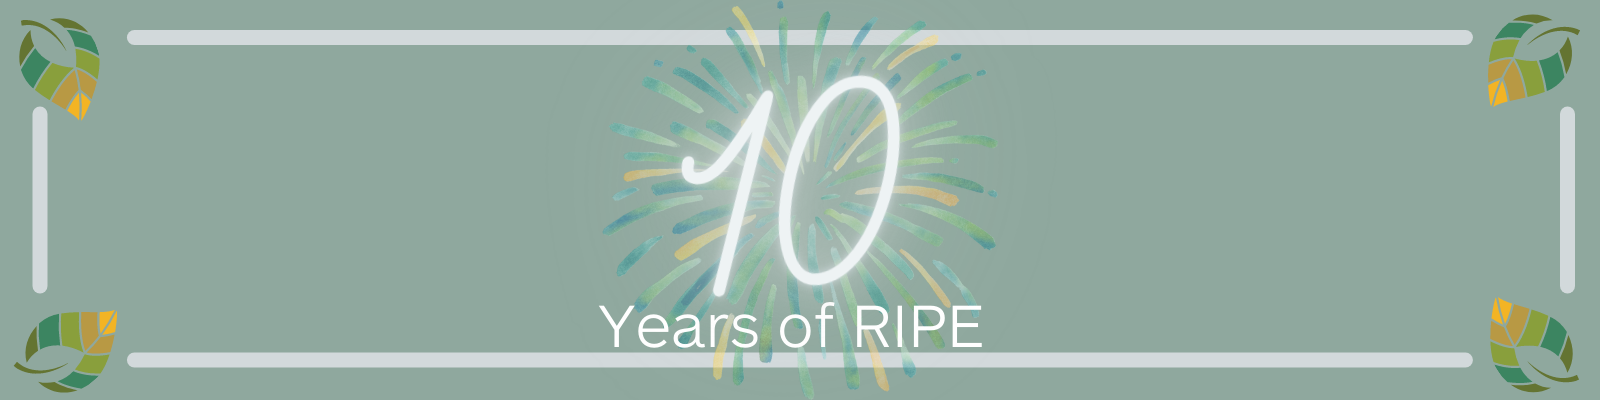 10 Years of RIPE banner